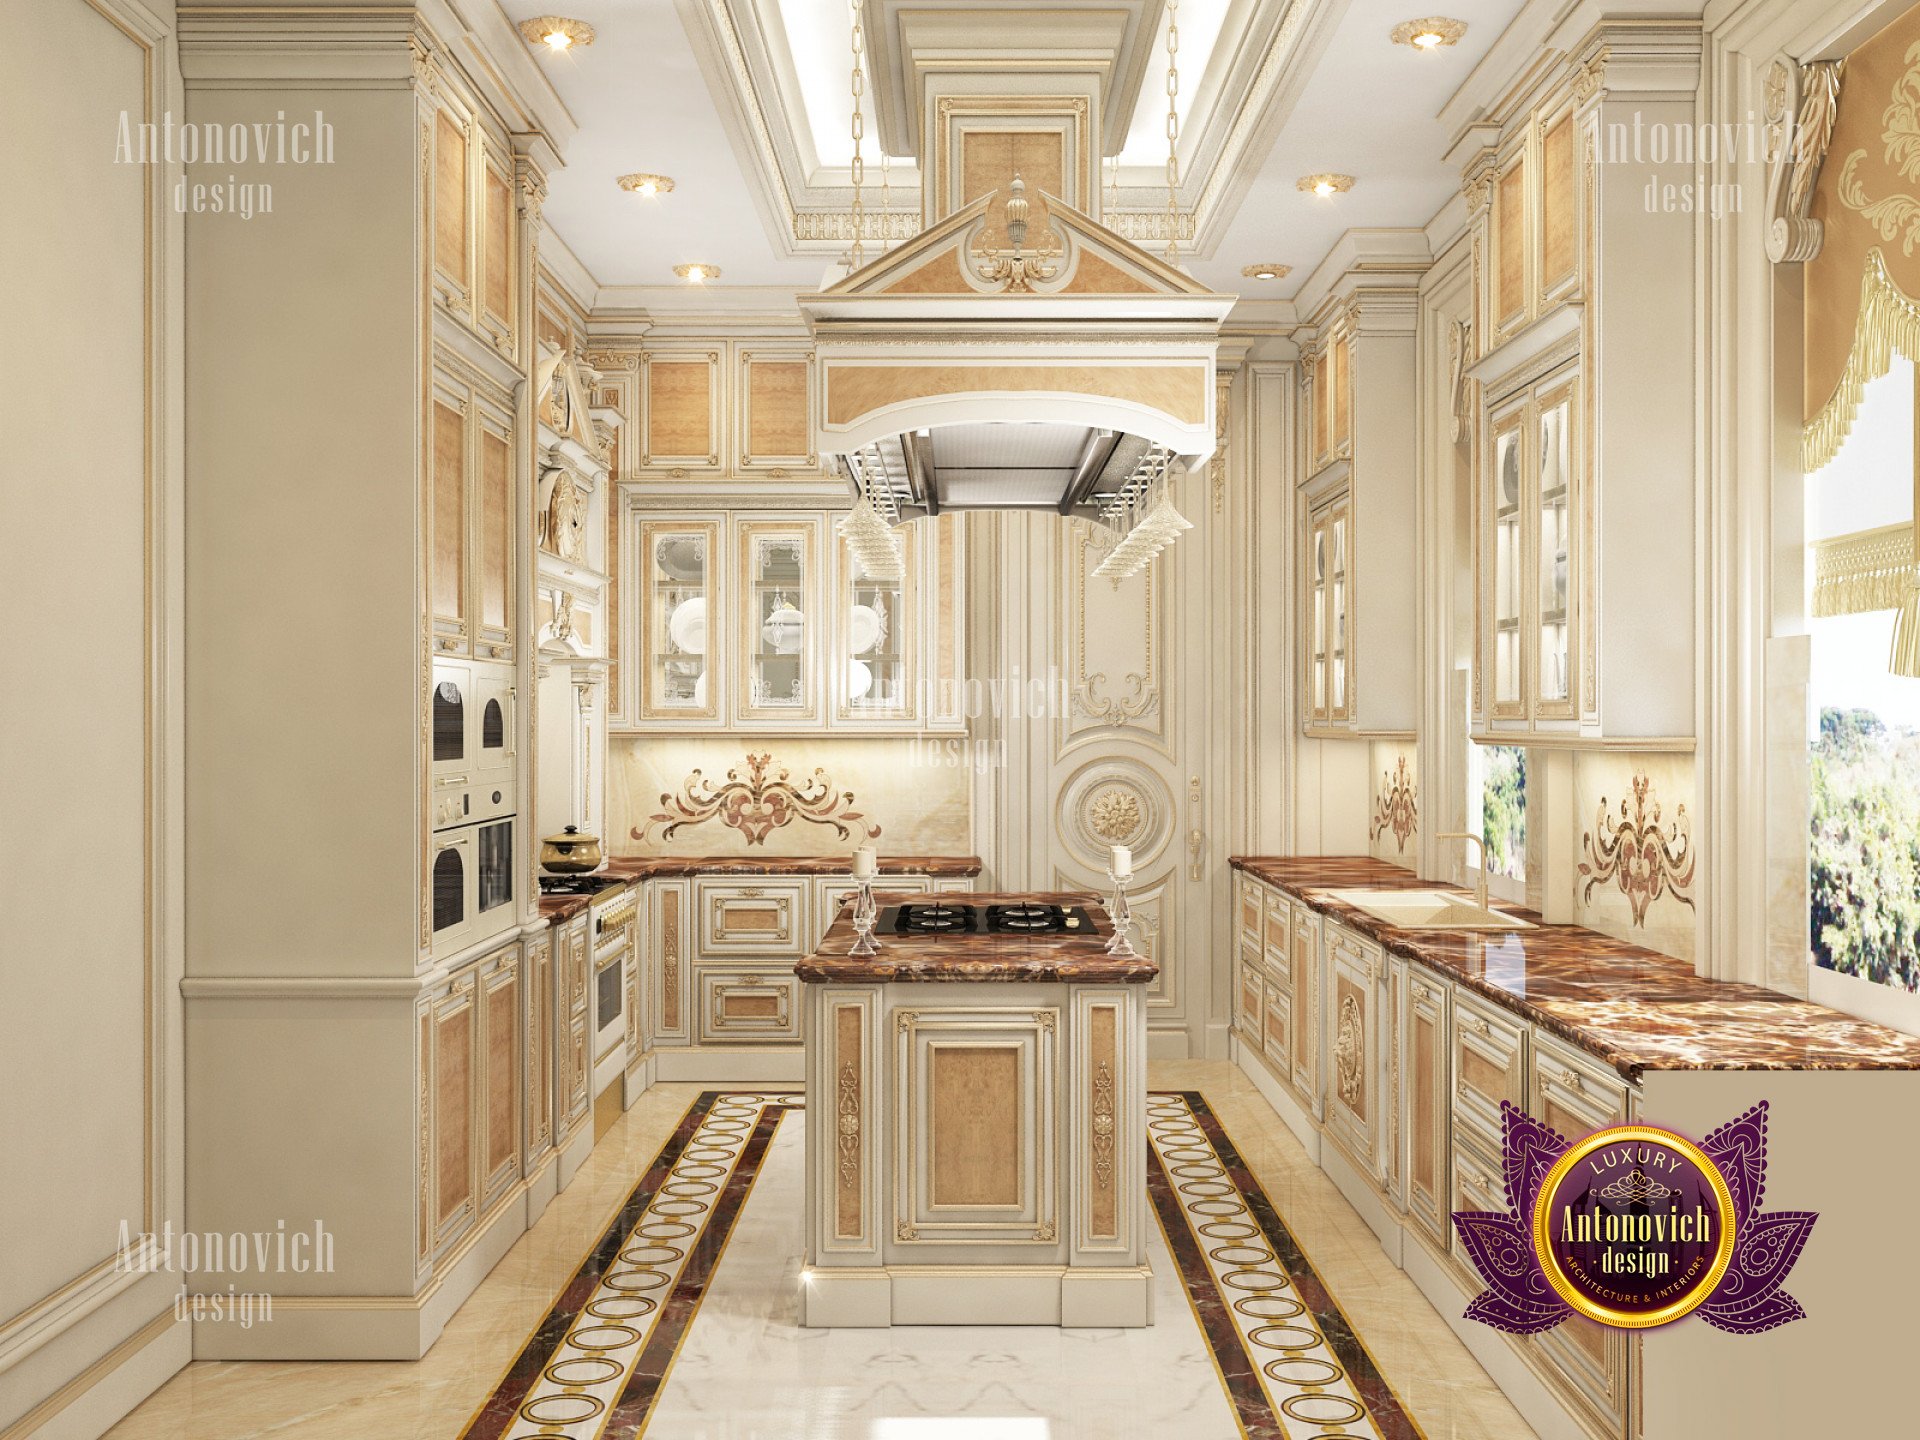 Luxury Kitchen Design Luxury Interior Design Company In California